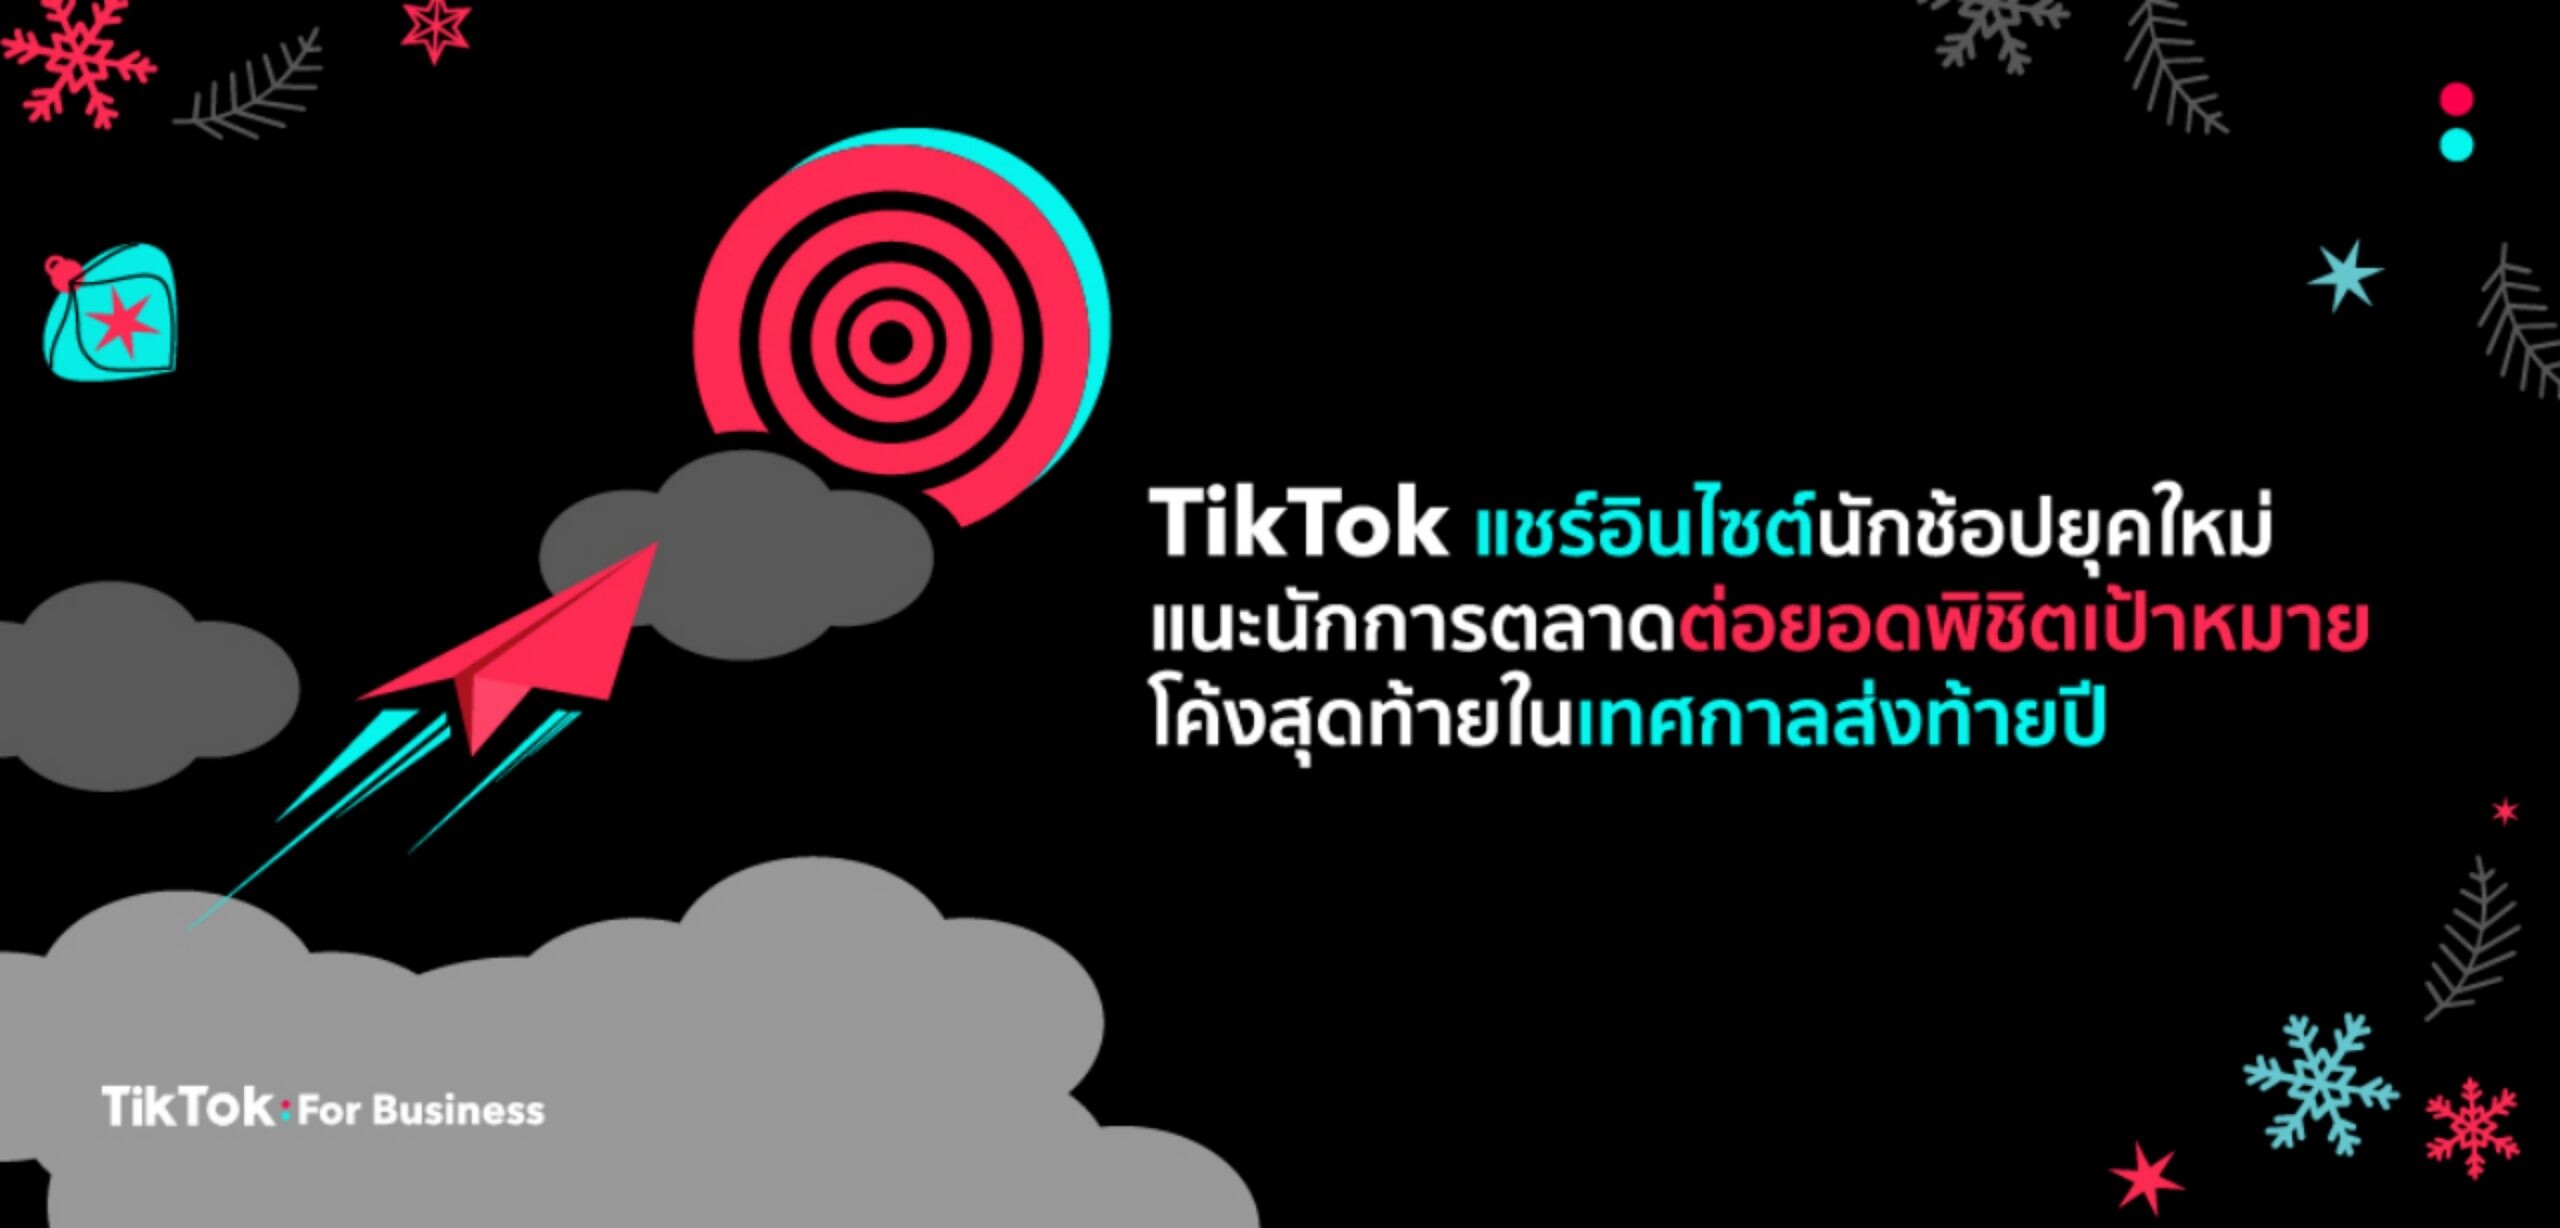 TikTok แชร์อินไซต์นักช้อปยุคใหม่ แนะนักการตลาดต่อยอดพิชิตเป้าหมายโค้งสุดท้ายในเทศกาลส่งท้ายปี